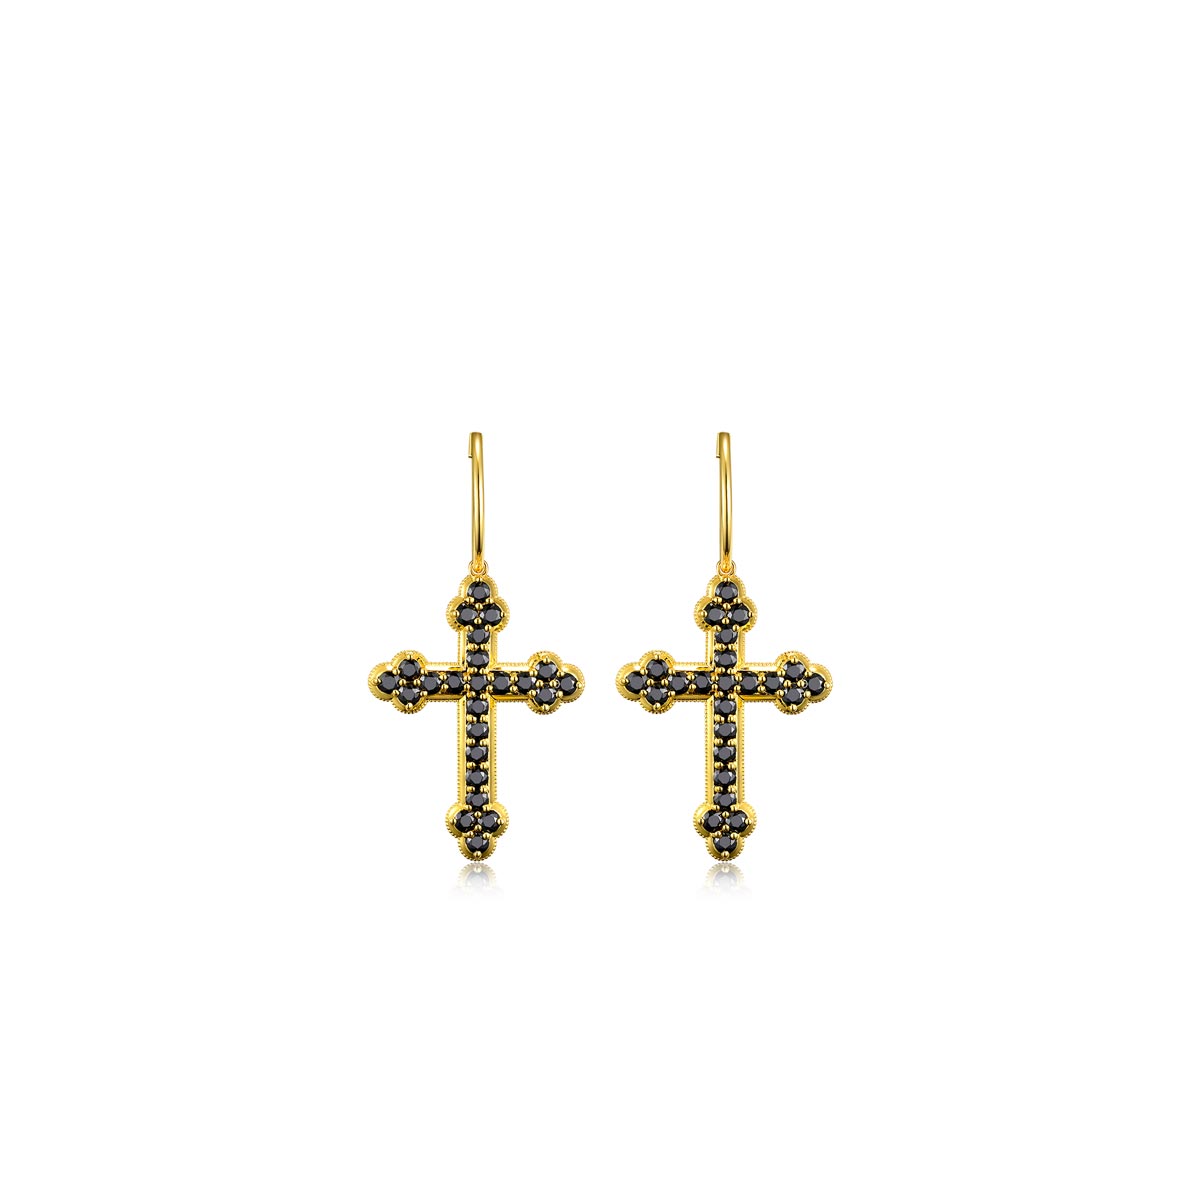 gold cross earrings, black gemstones